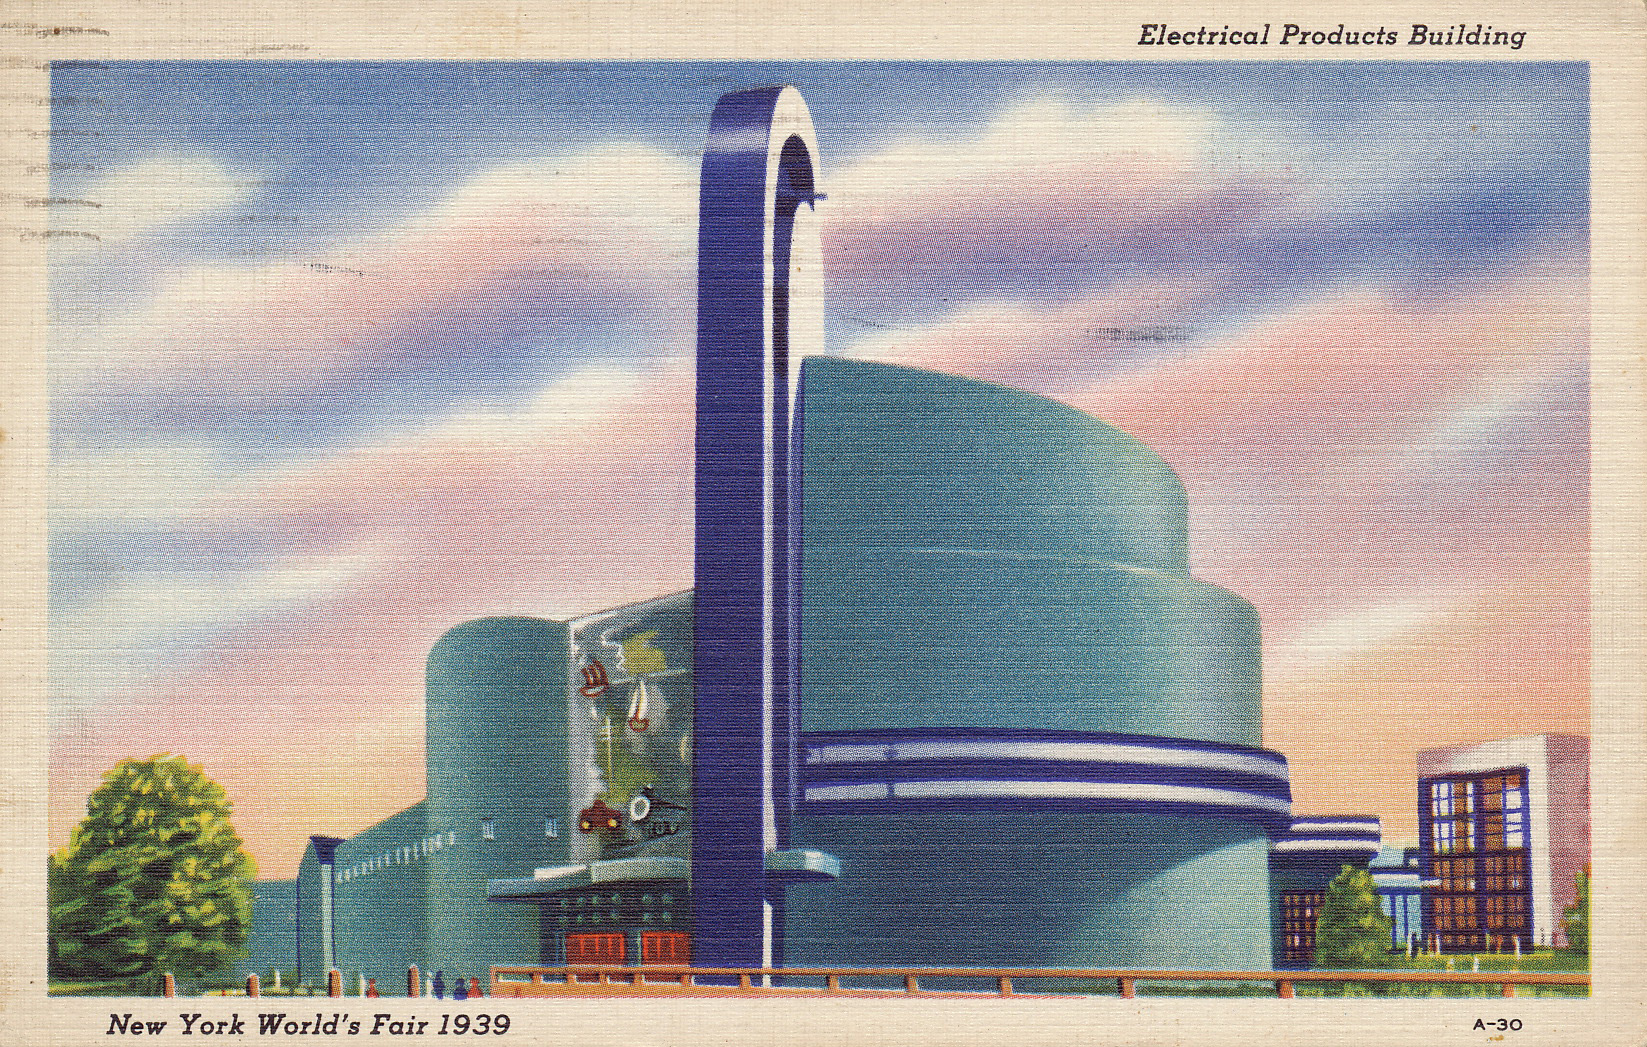 http://jrandomimage.com/images/worlds-fair-1939-electrical-products2.jpg